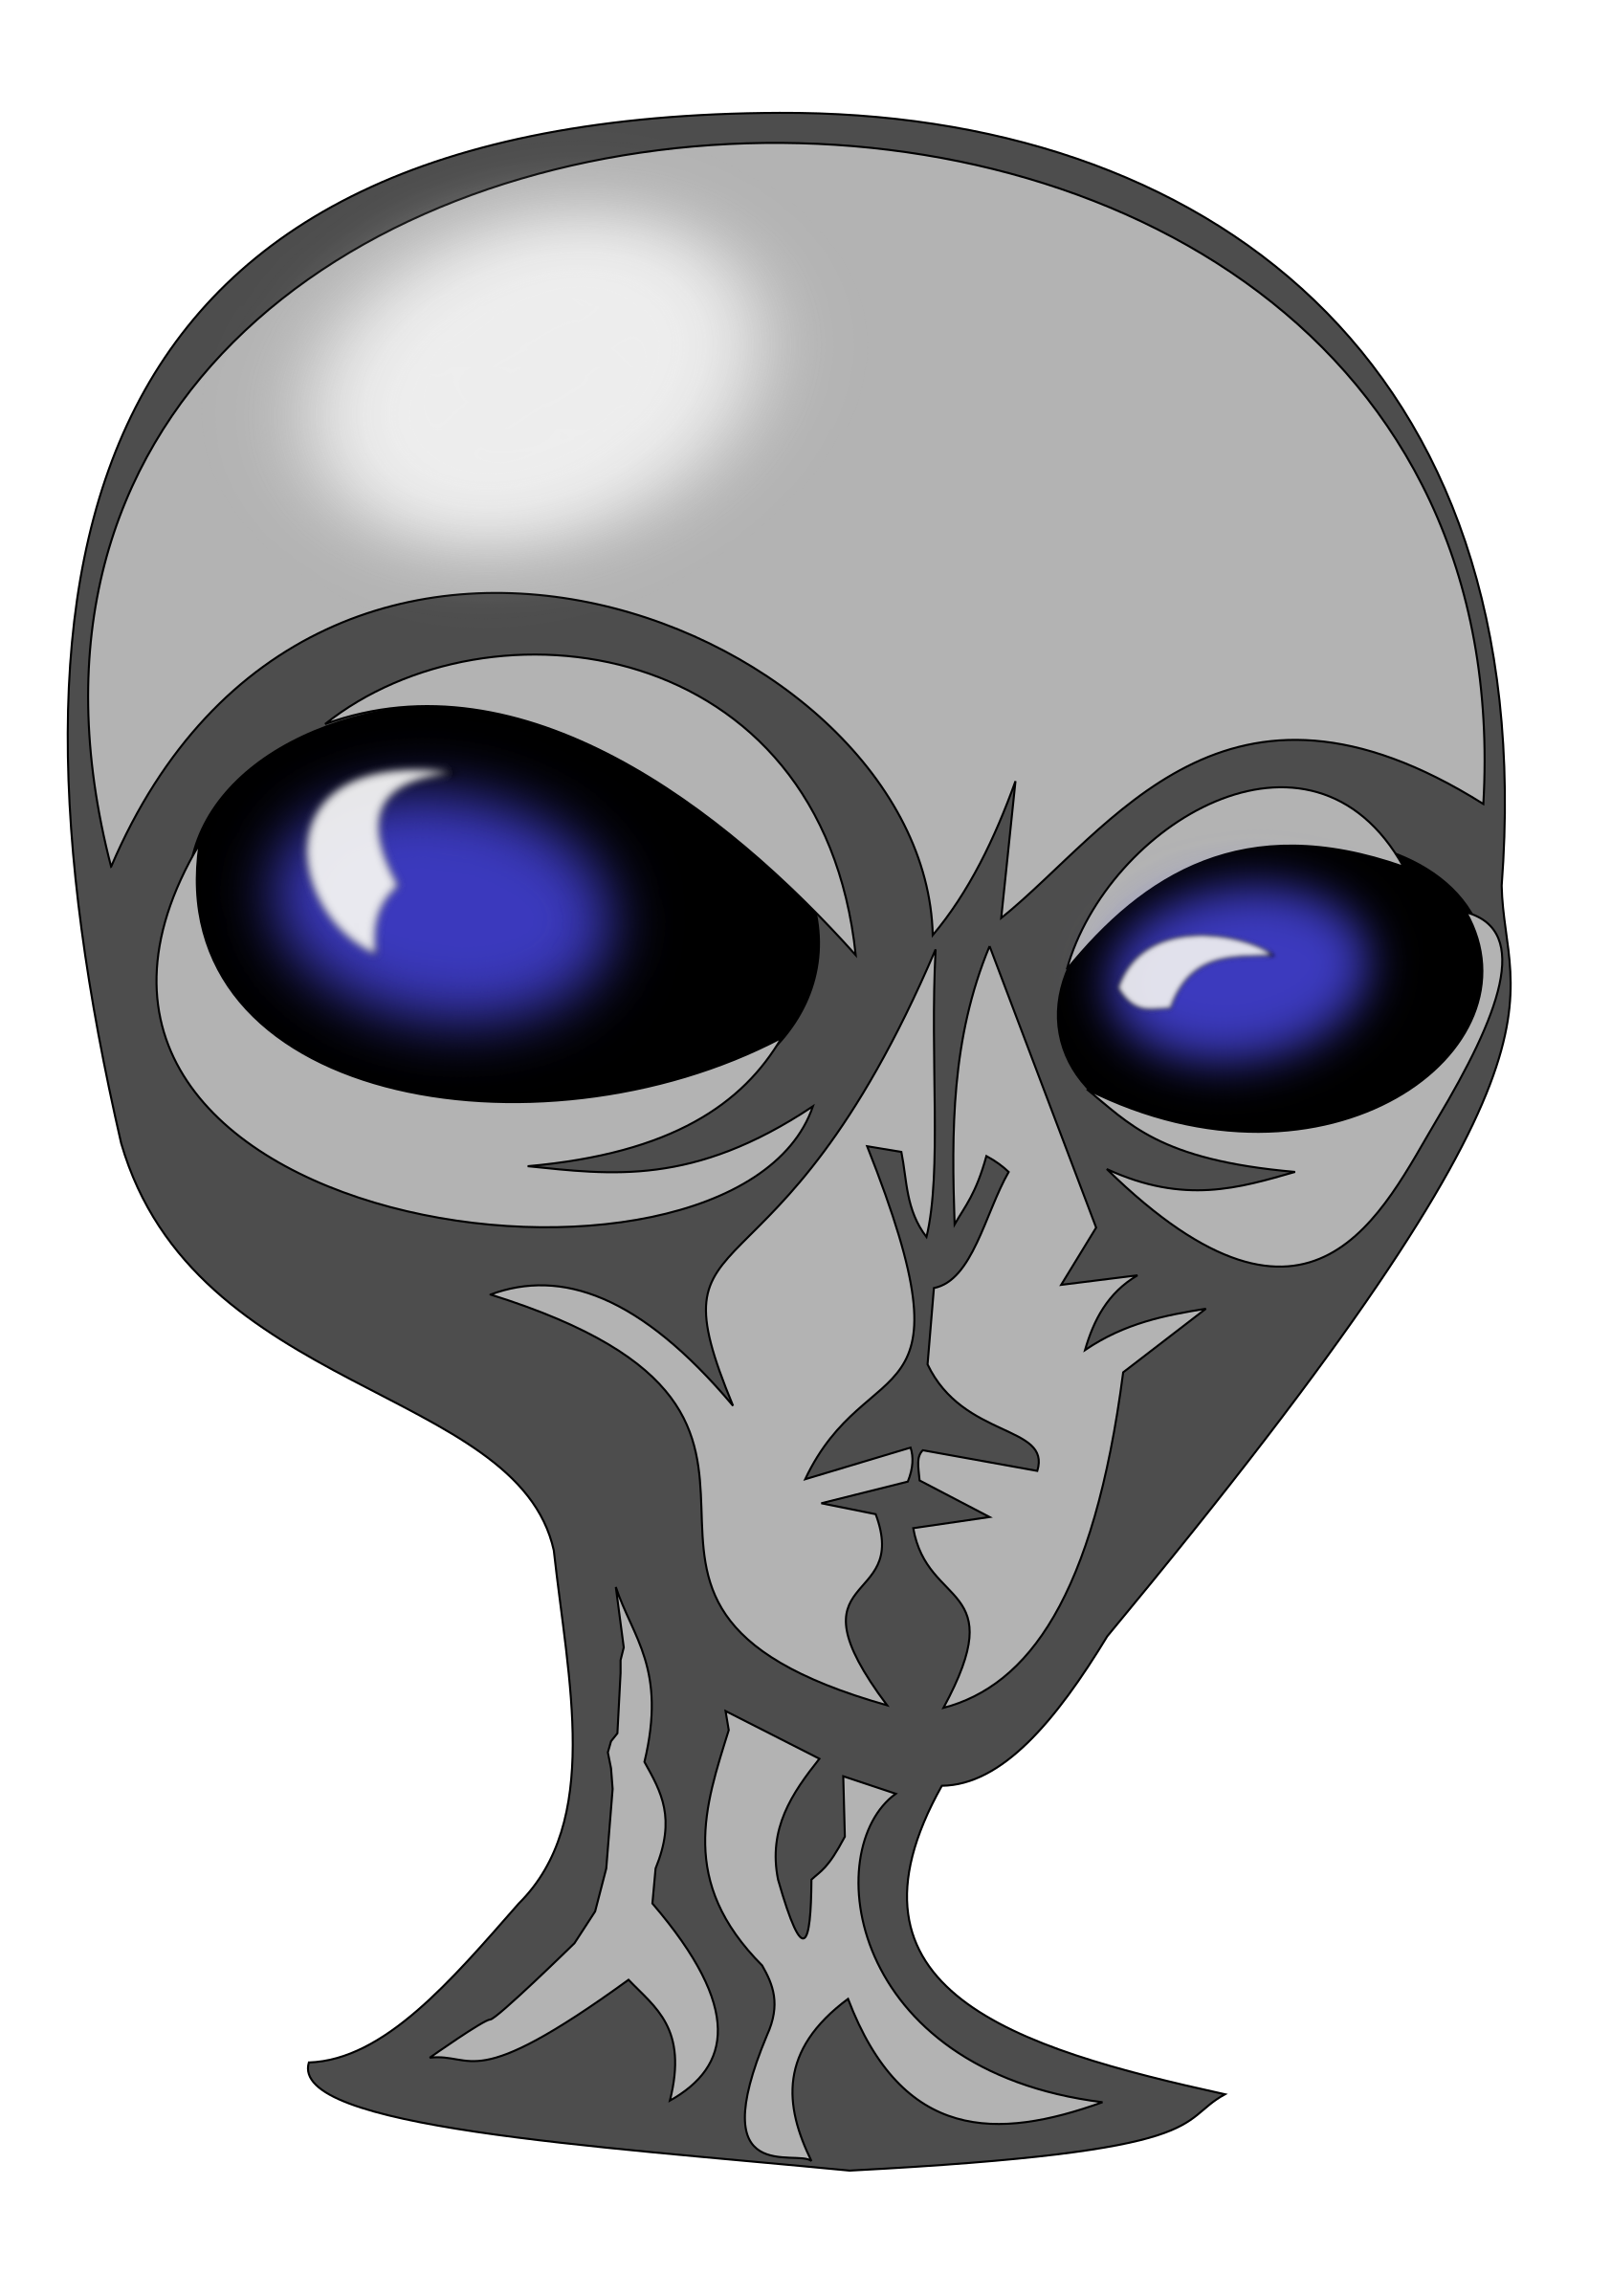 Alien De Dibujos Animados La Vida Extraterrestre Imagen Png Imagen ...